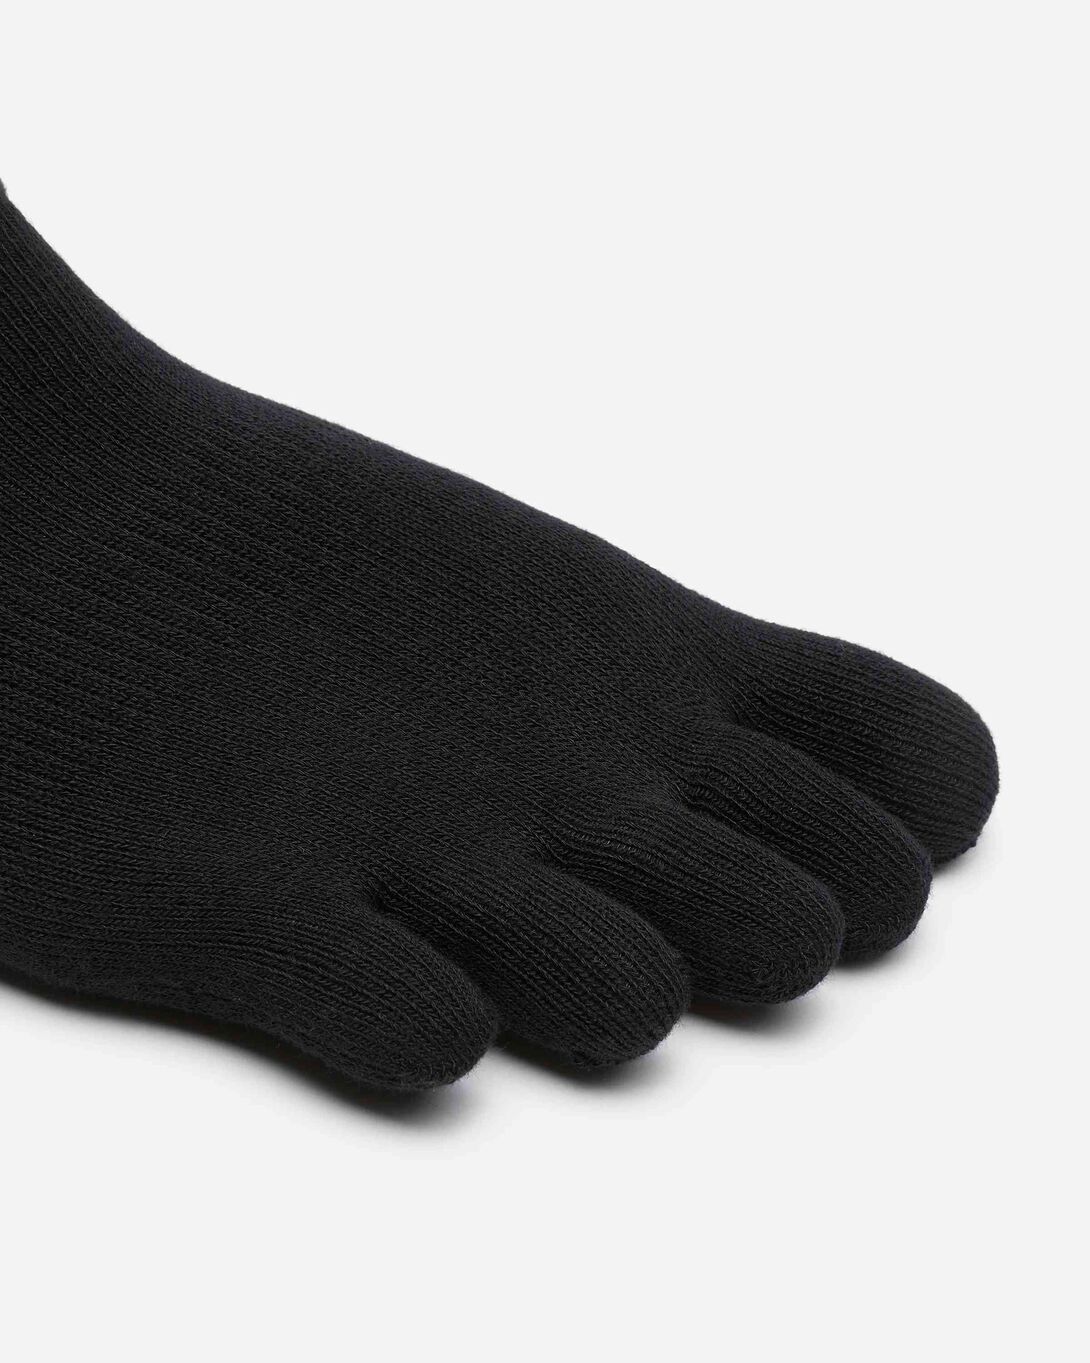 Toe Socks for Men No Show Low Cut Cotton Split Toe 5 Finger